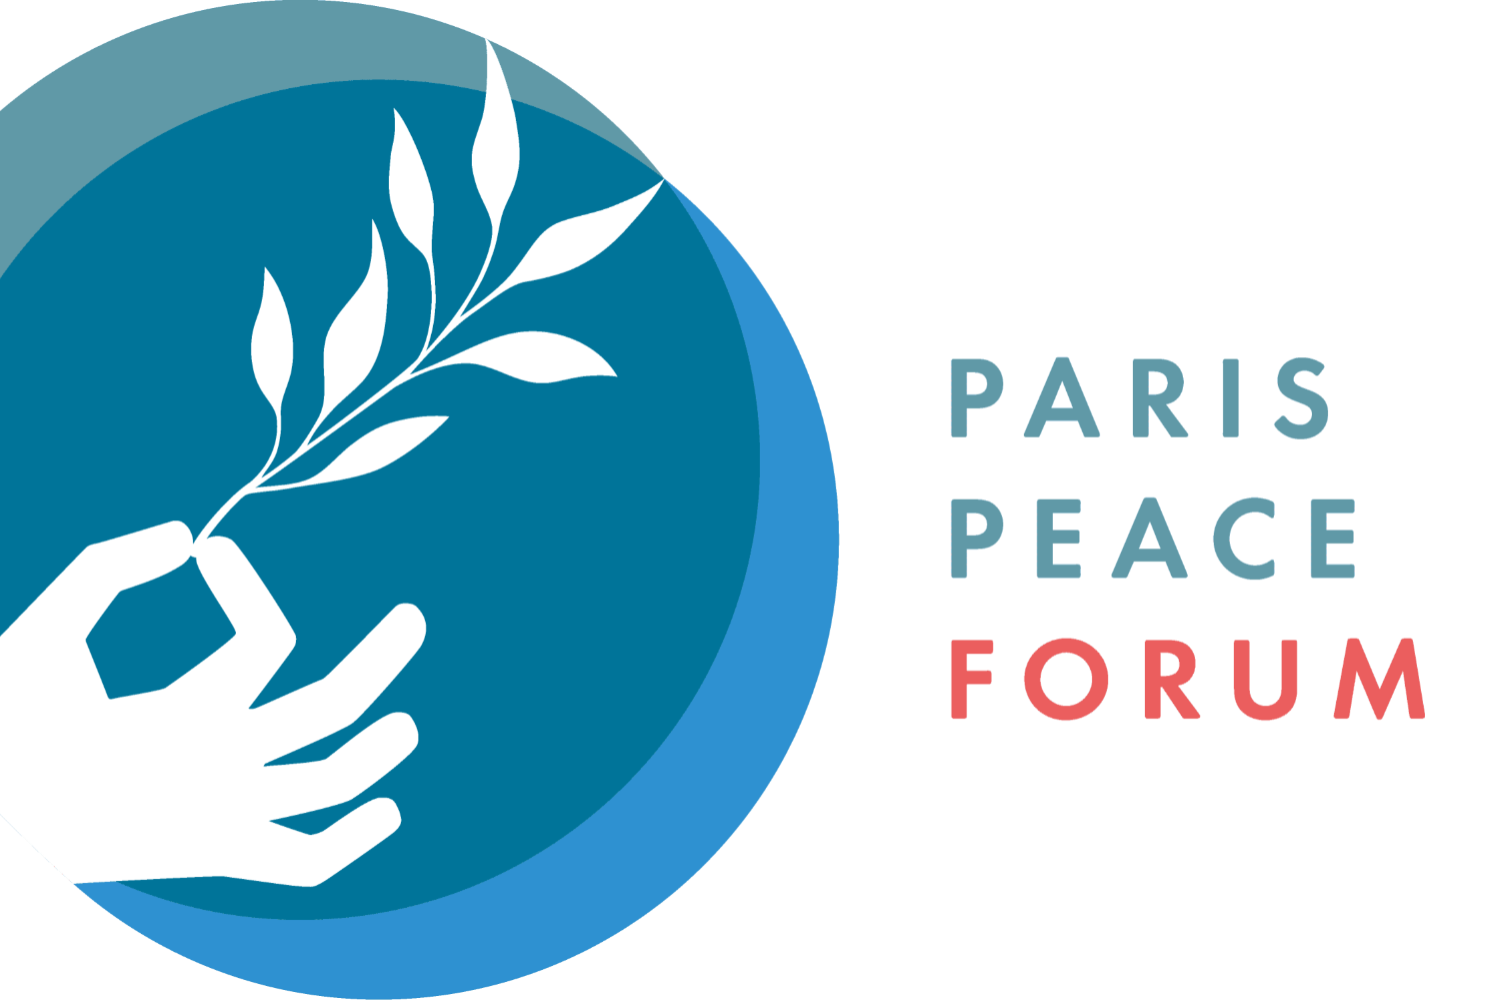 Paris Peace Forum 2020